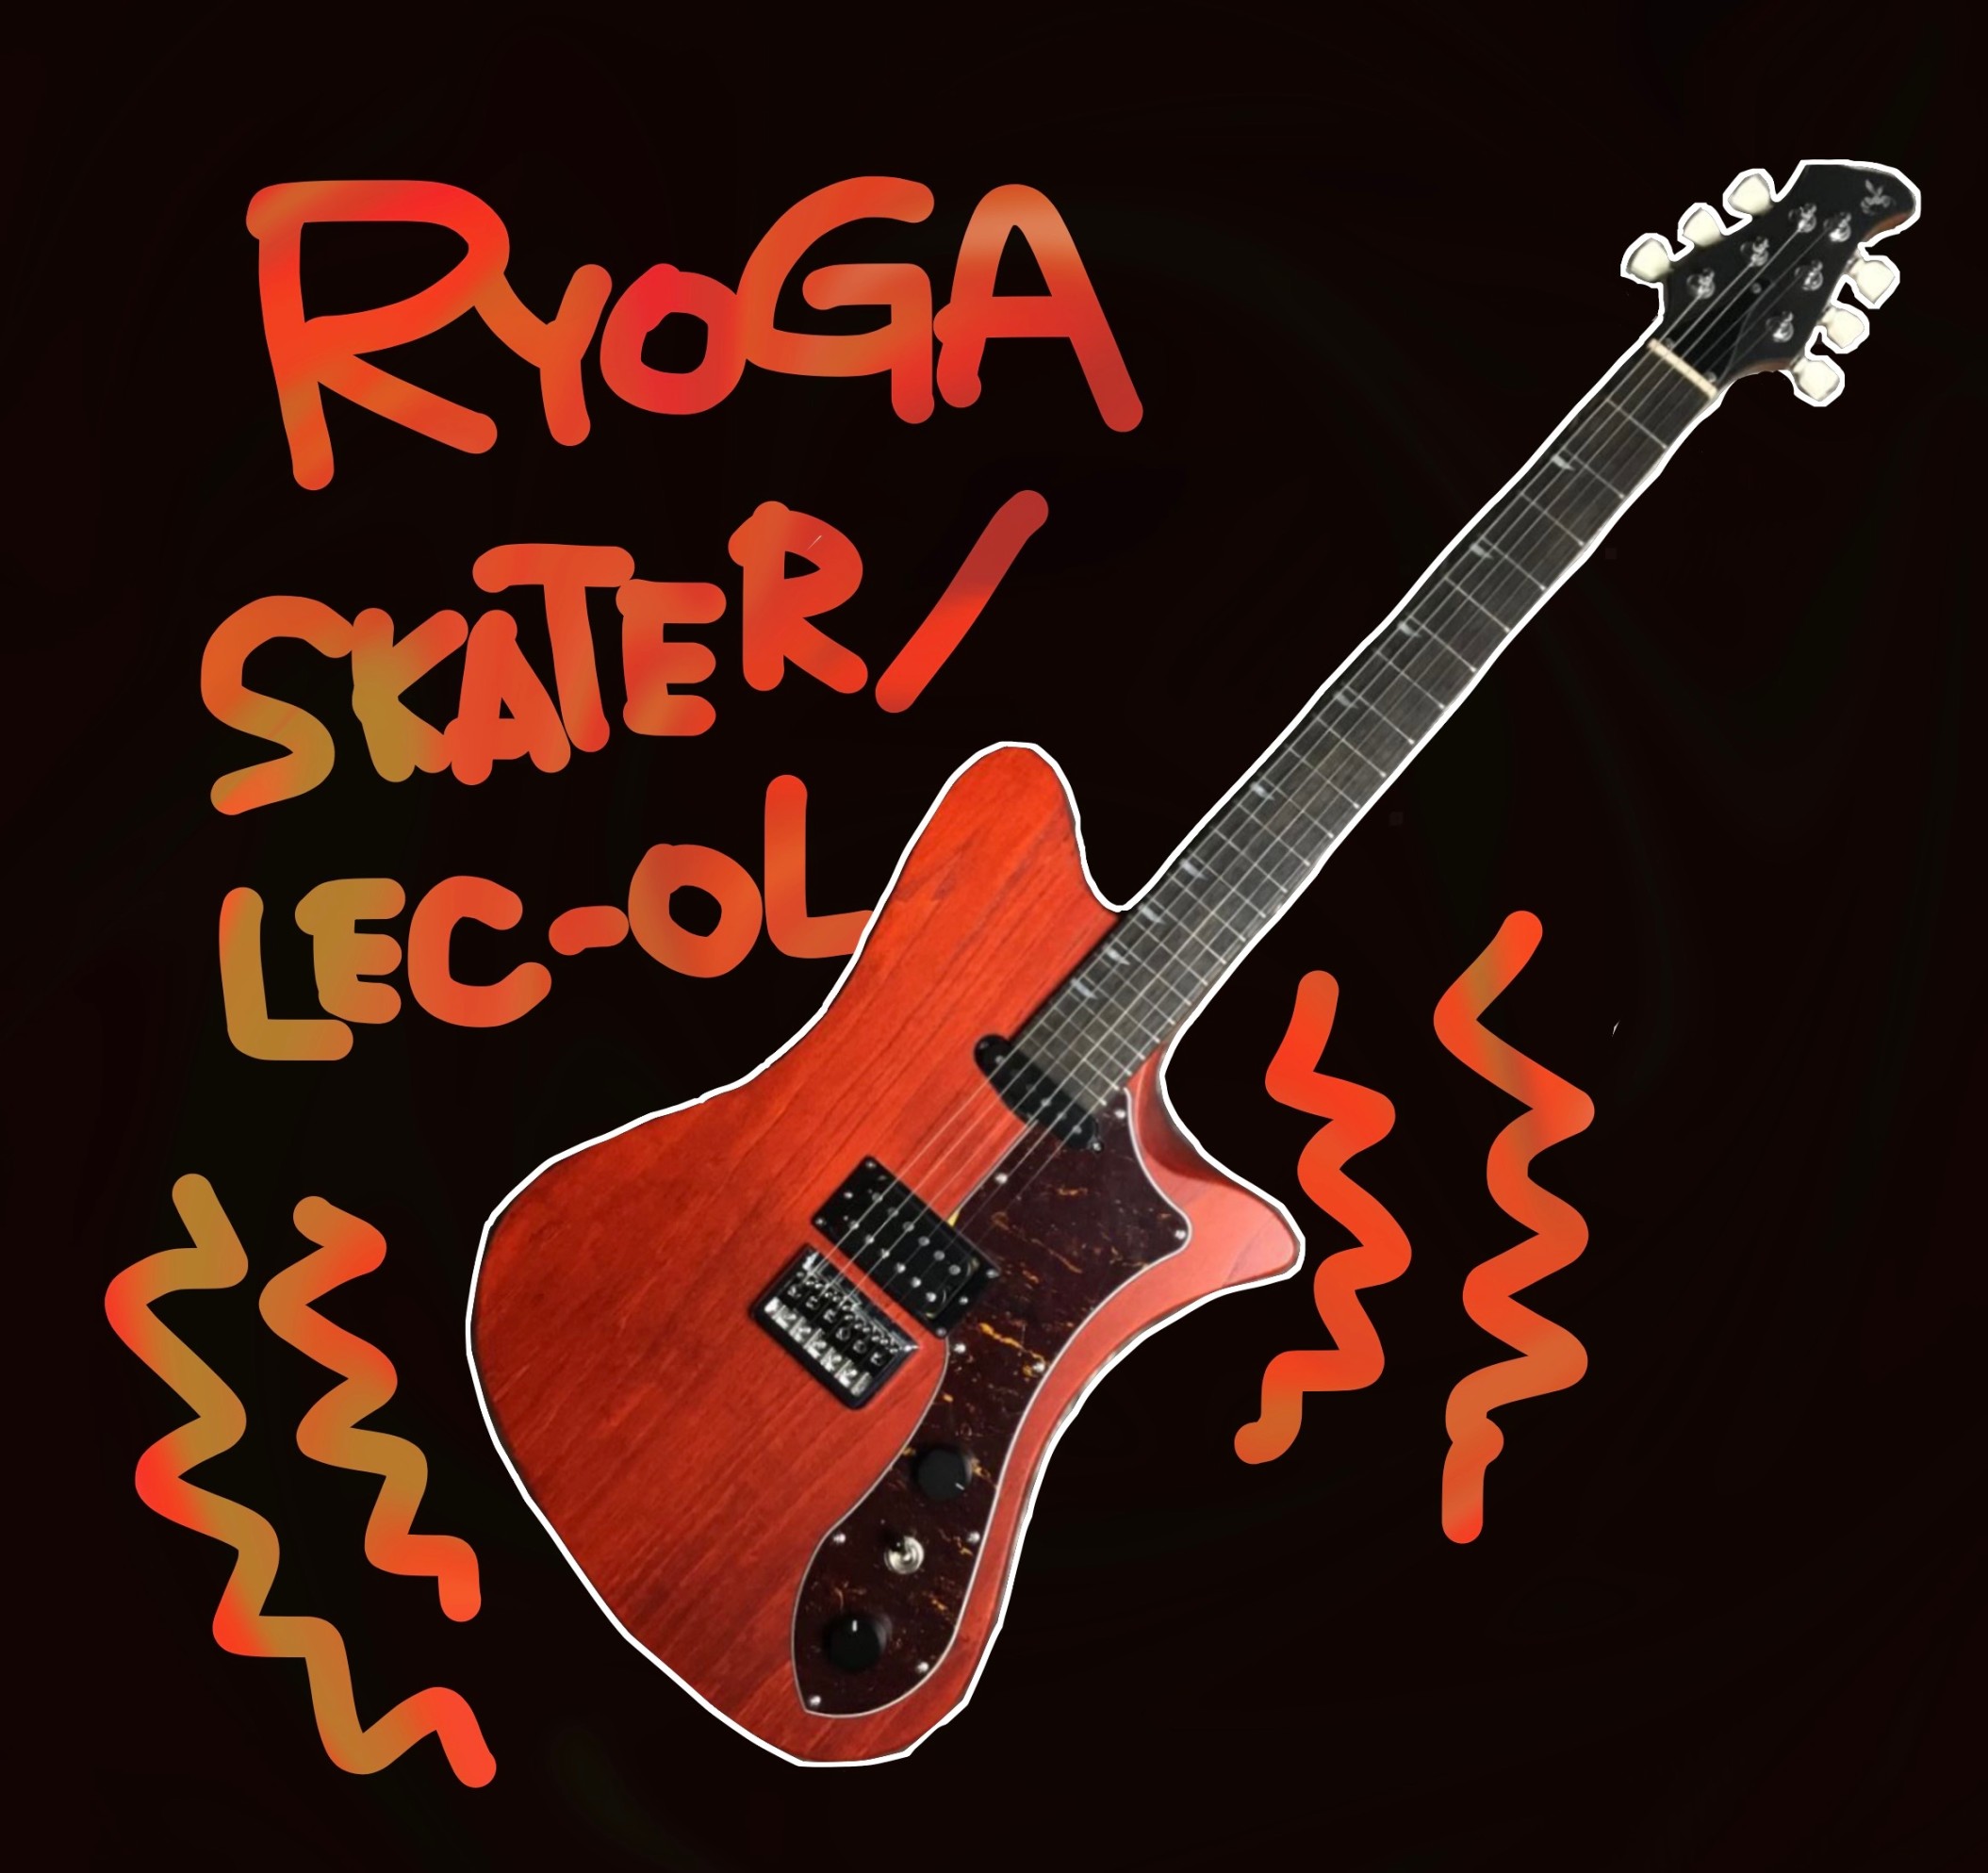 RYOGA(リョウガ)SKATER/LEC-OL